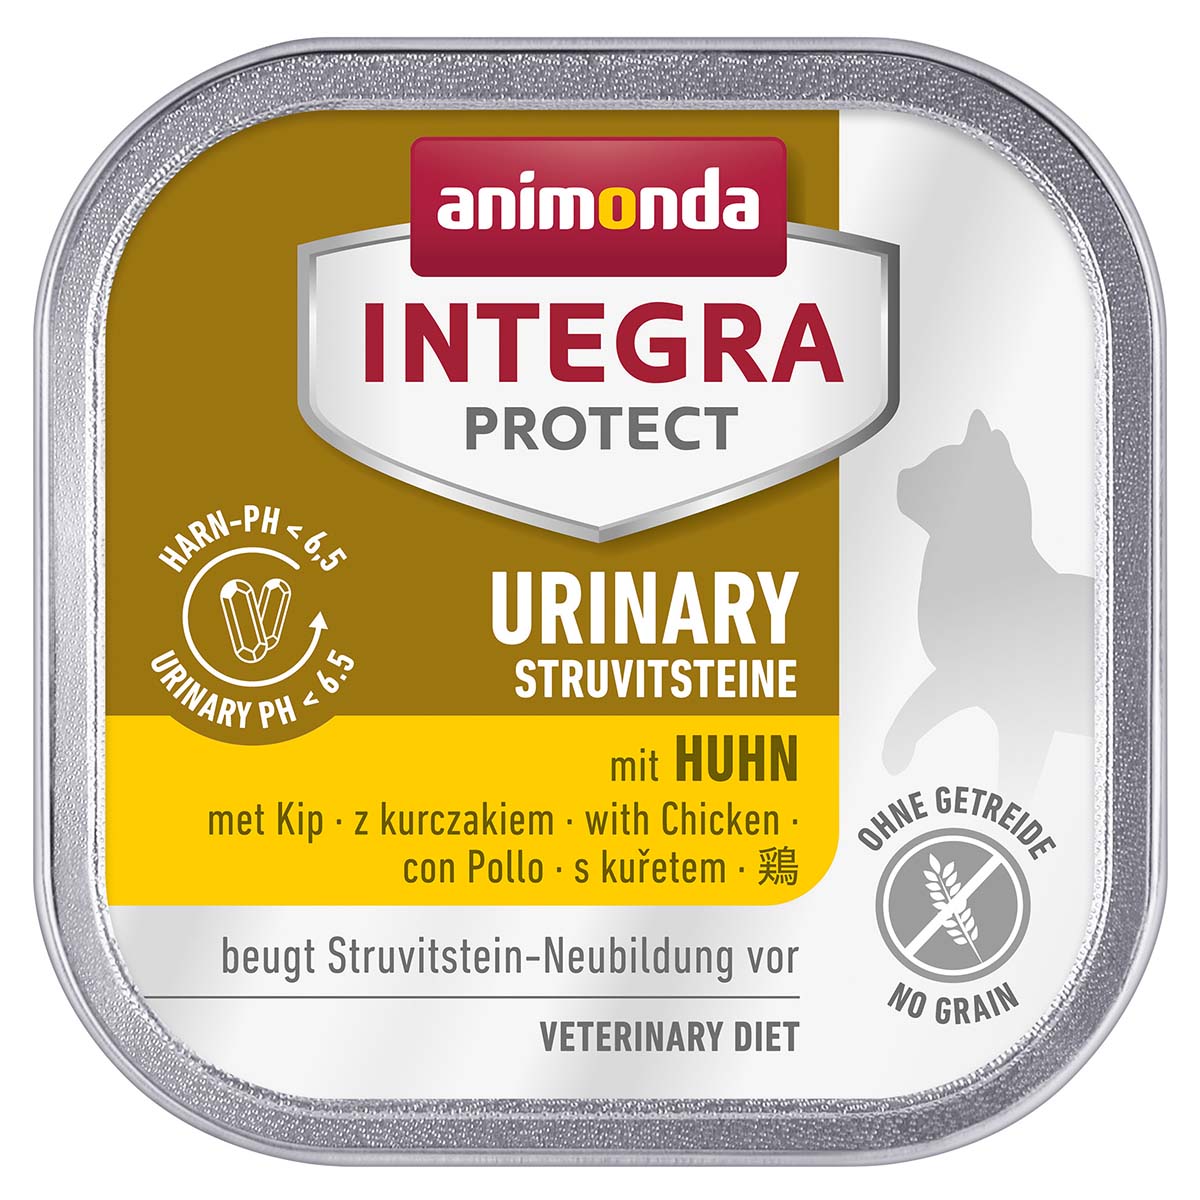 animonda INTEGRA PROTECT Adult Urinary Struvitstein mit Huhn 6x100g von animonda Integra Protect